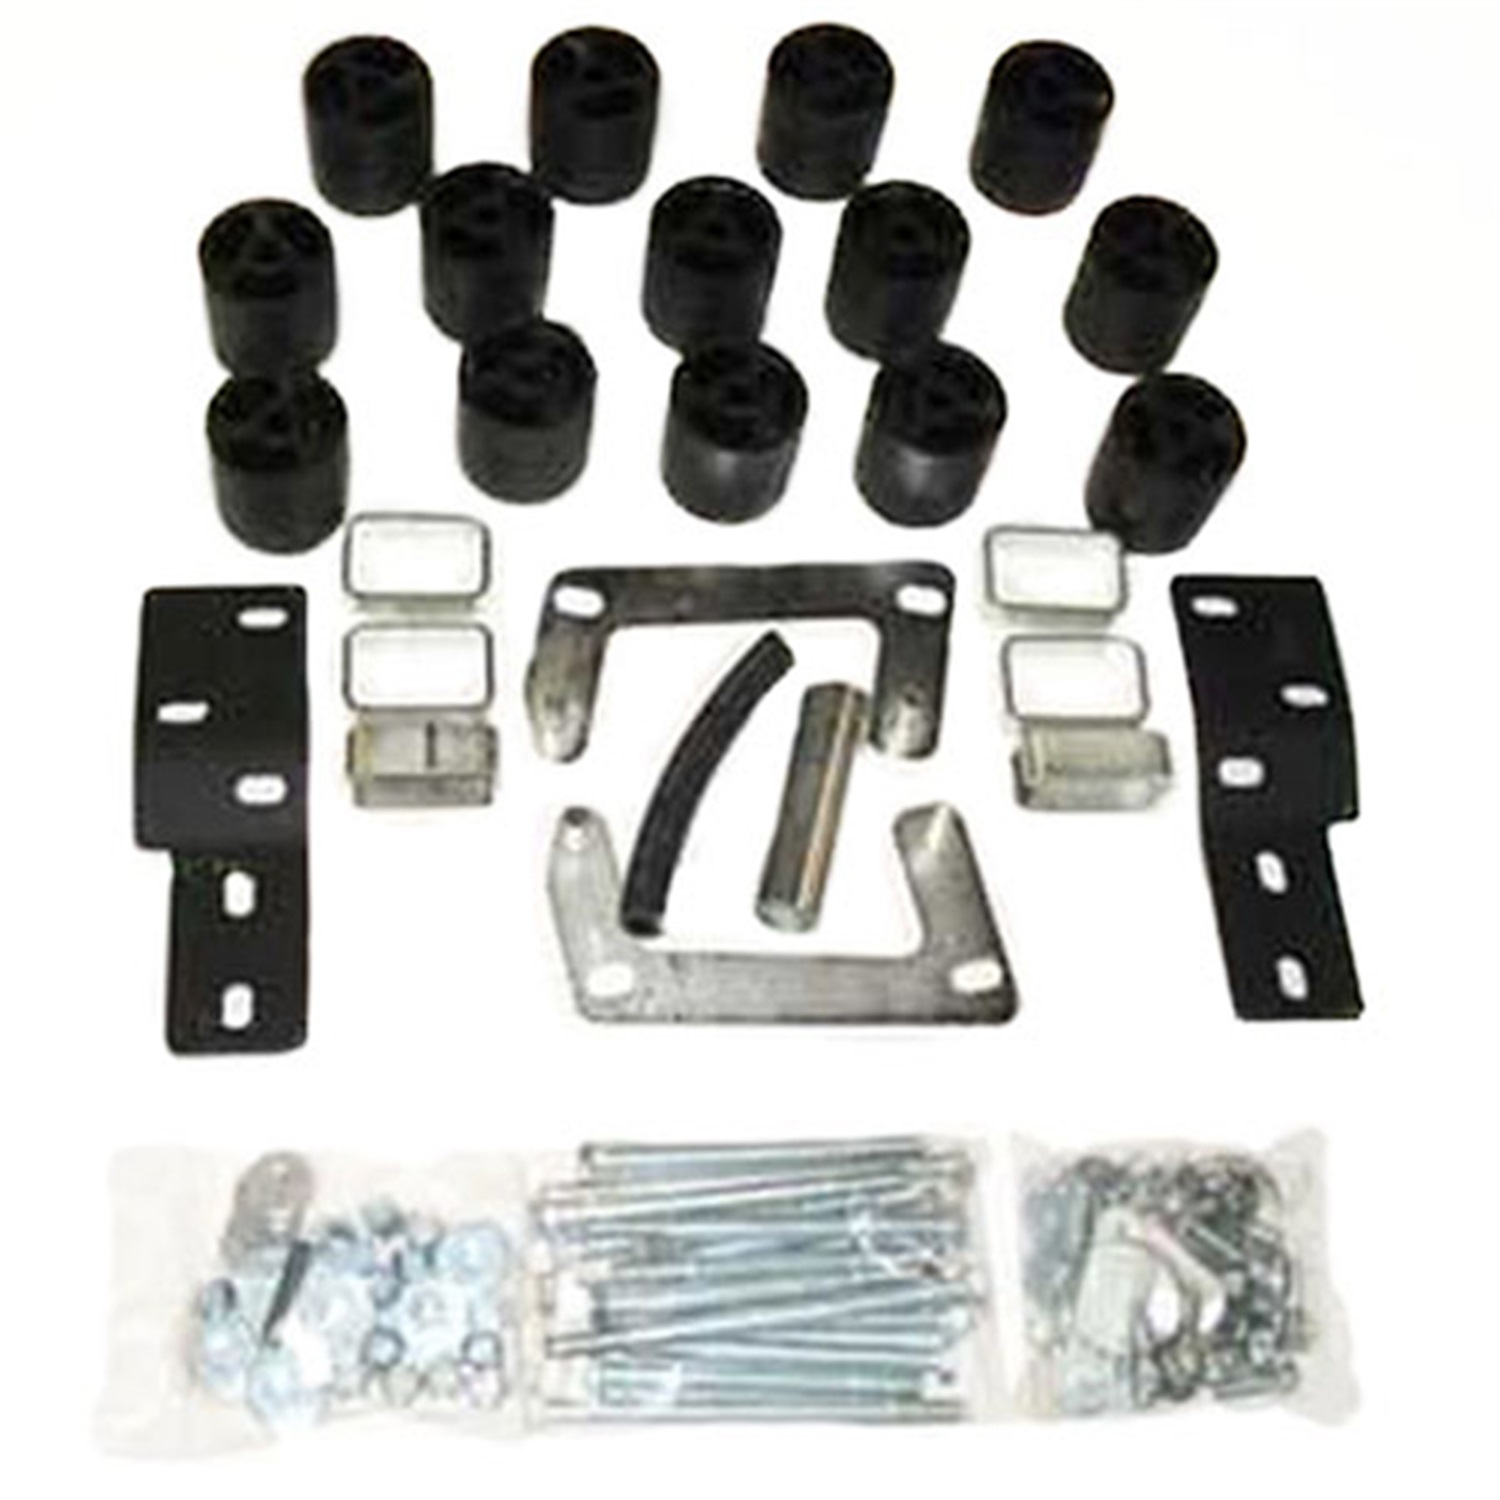 Performance Accessories Performance Accessories 883 Body Lift Kit Fits 98-00 B2500 B3000 B4000 Ranger